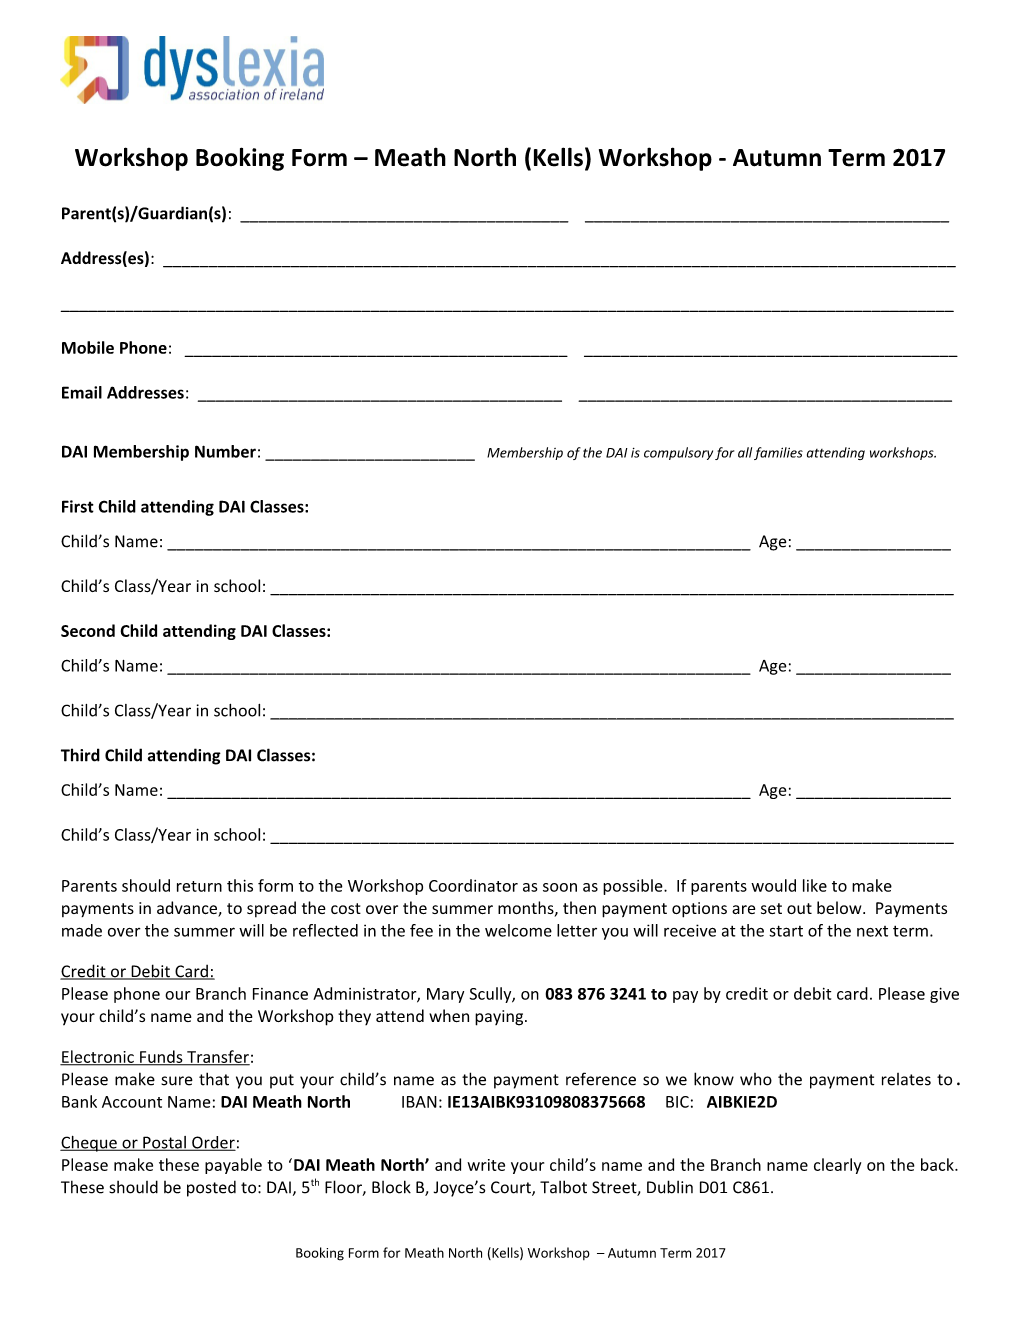 Workshop Booking Form Meath North (Kells) Workshop - Autumn Term 2017